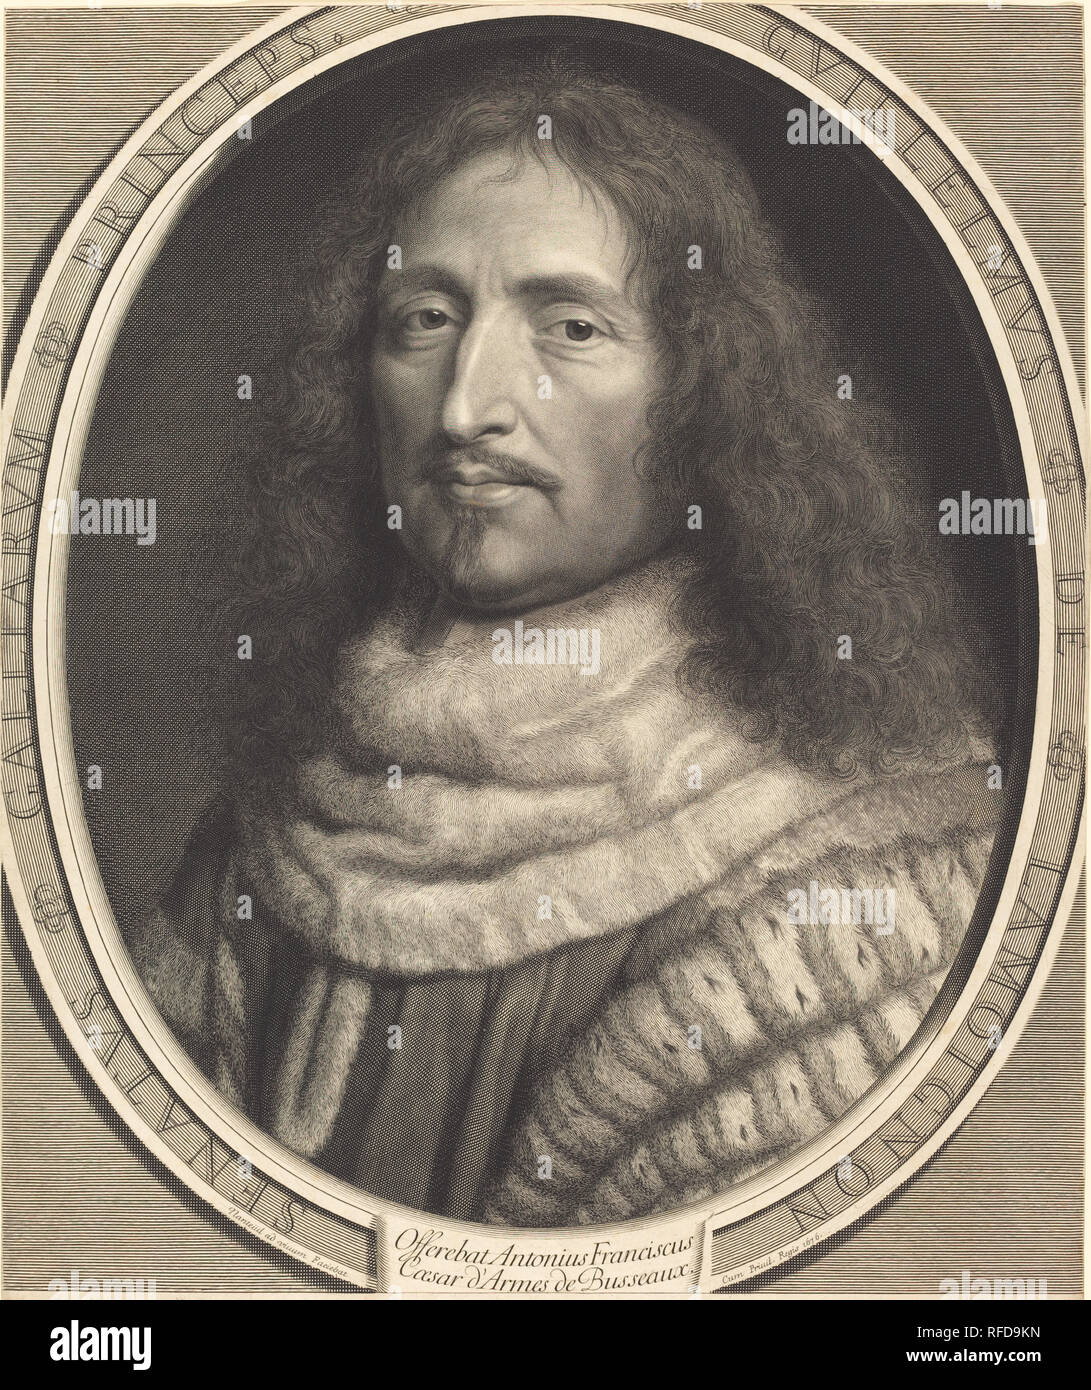 Guillaume de Lamoignon. Dated: 1676. Medium: engraving. Museum: National Gallery of Art, Washington DC. Author: Robert Nanteuil. Stock Photo